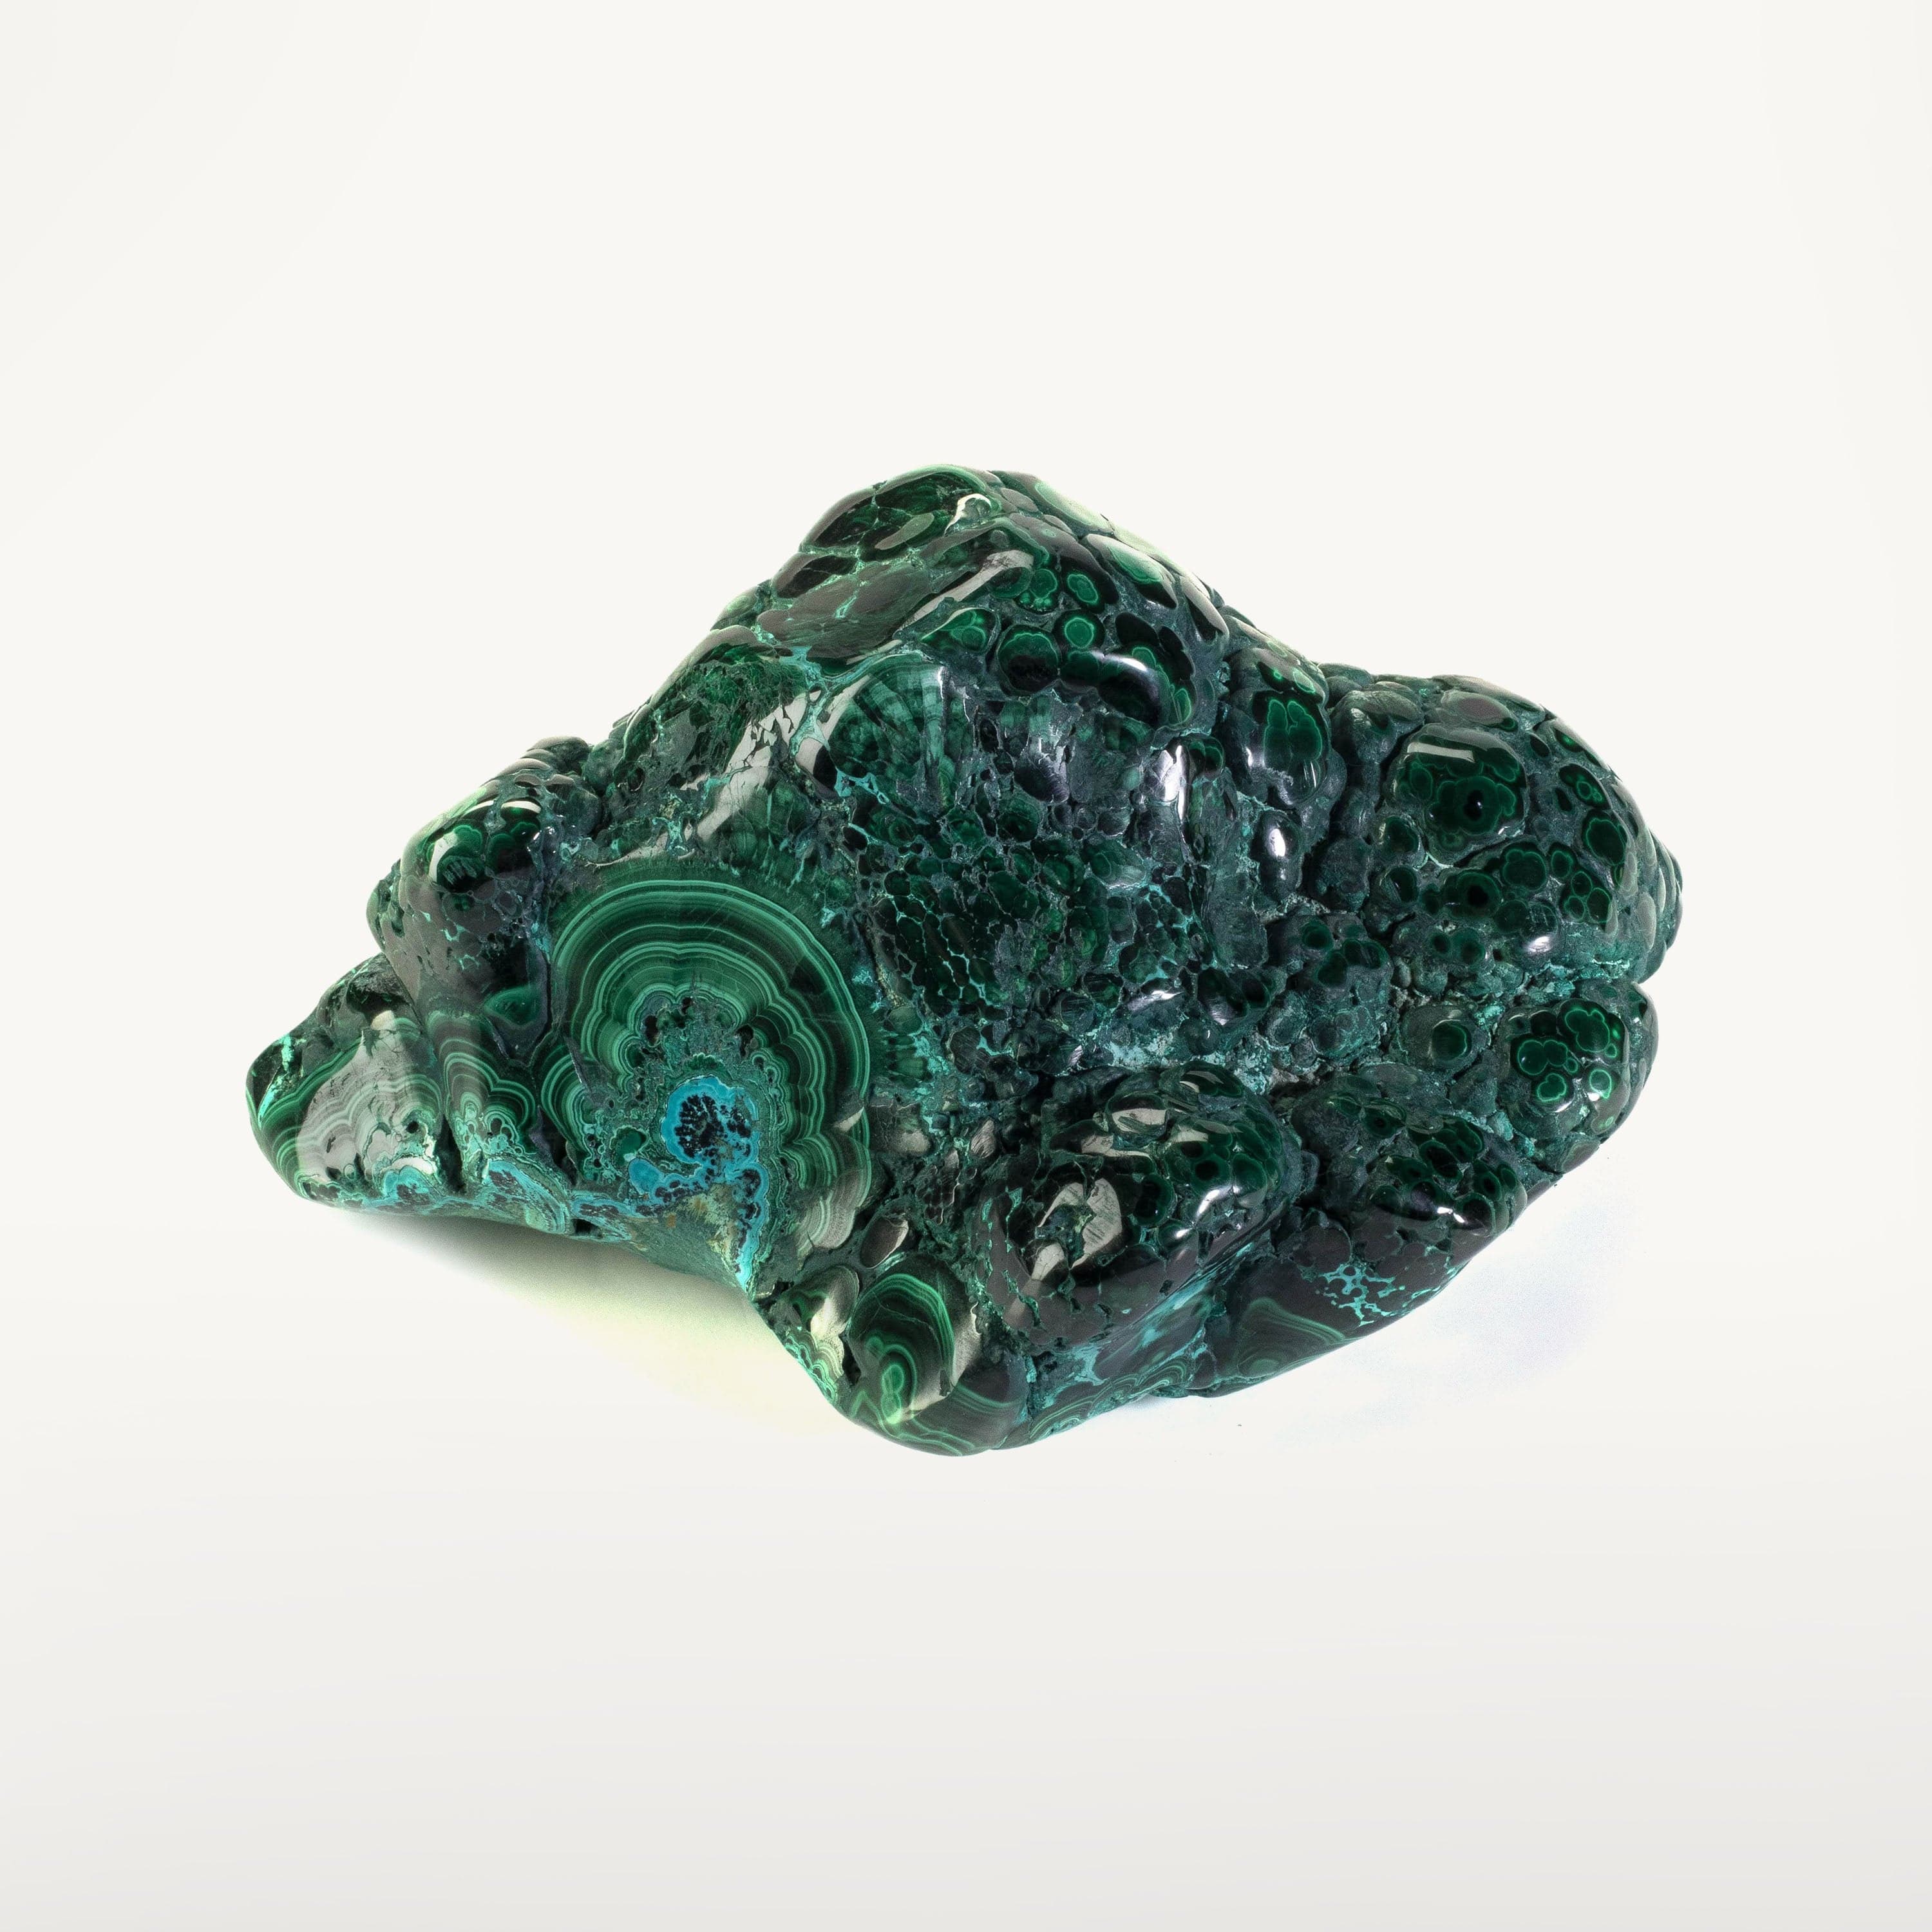 Kalifano Malachite Rare Natural Green Malachite with Blue Chrysocolla Freeform Specimen from Congo - 2.9 kg / 6.4 lbs MAC2800.001